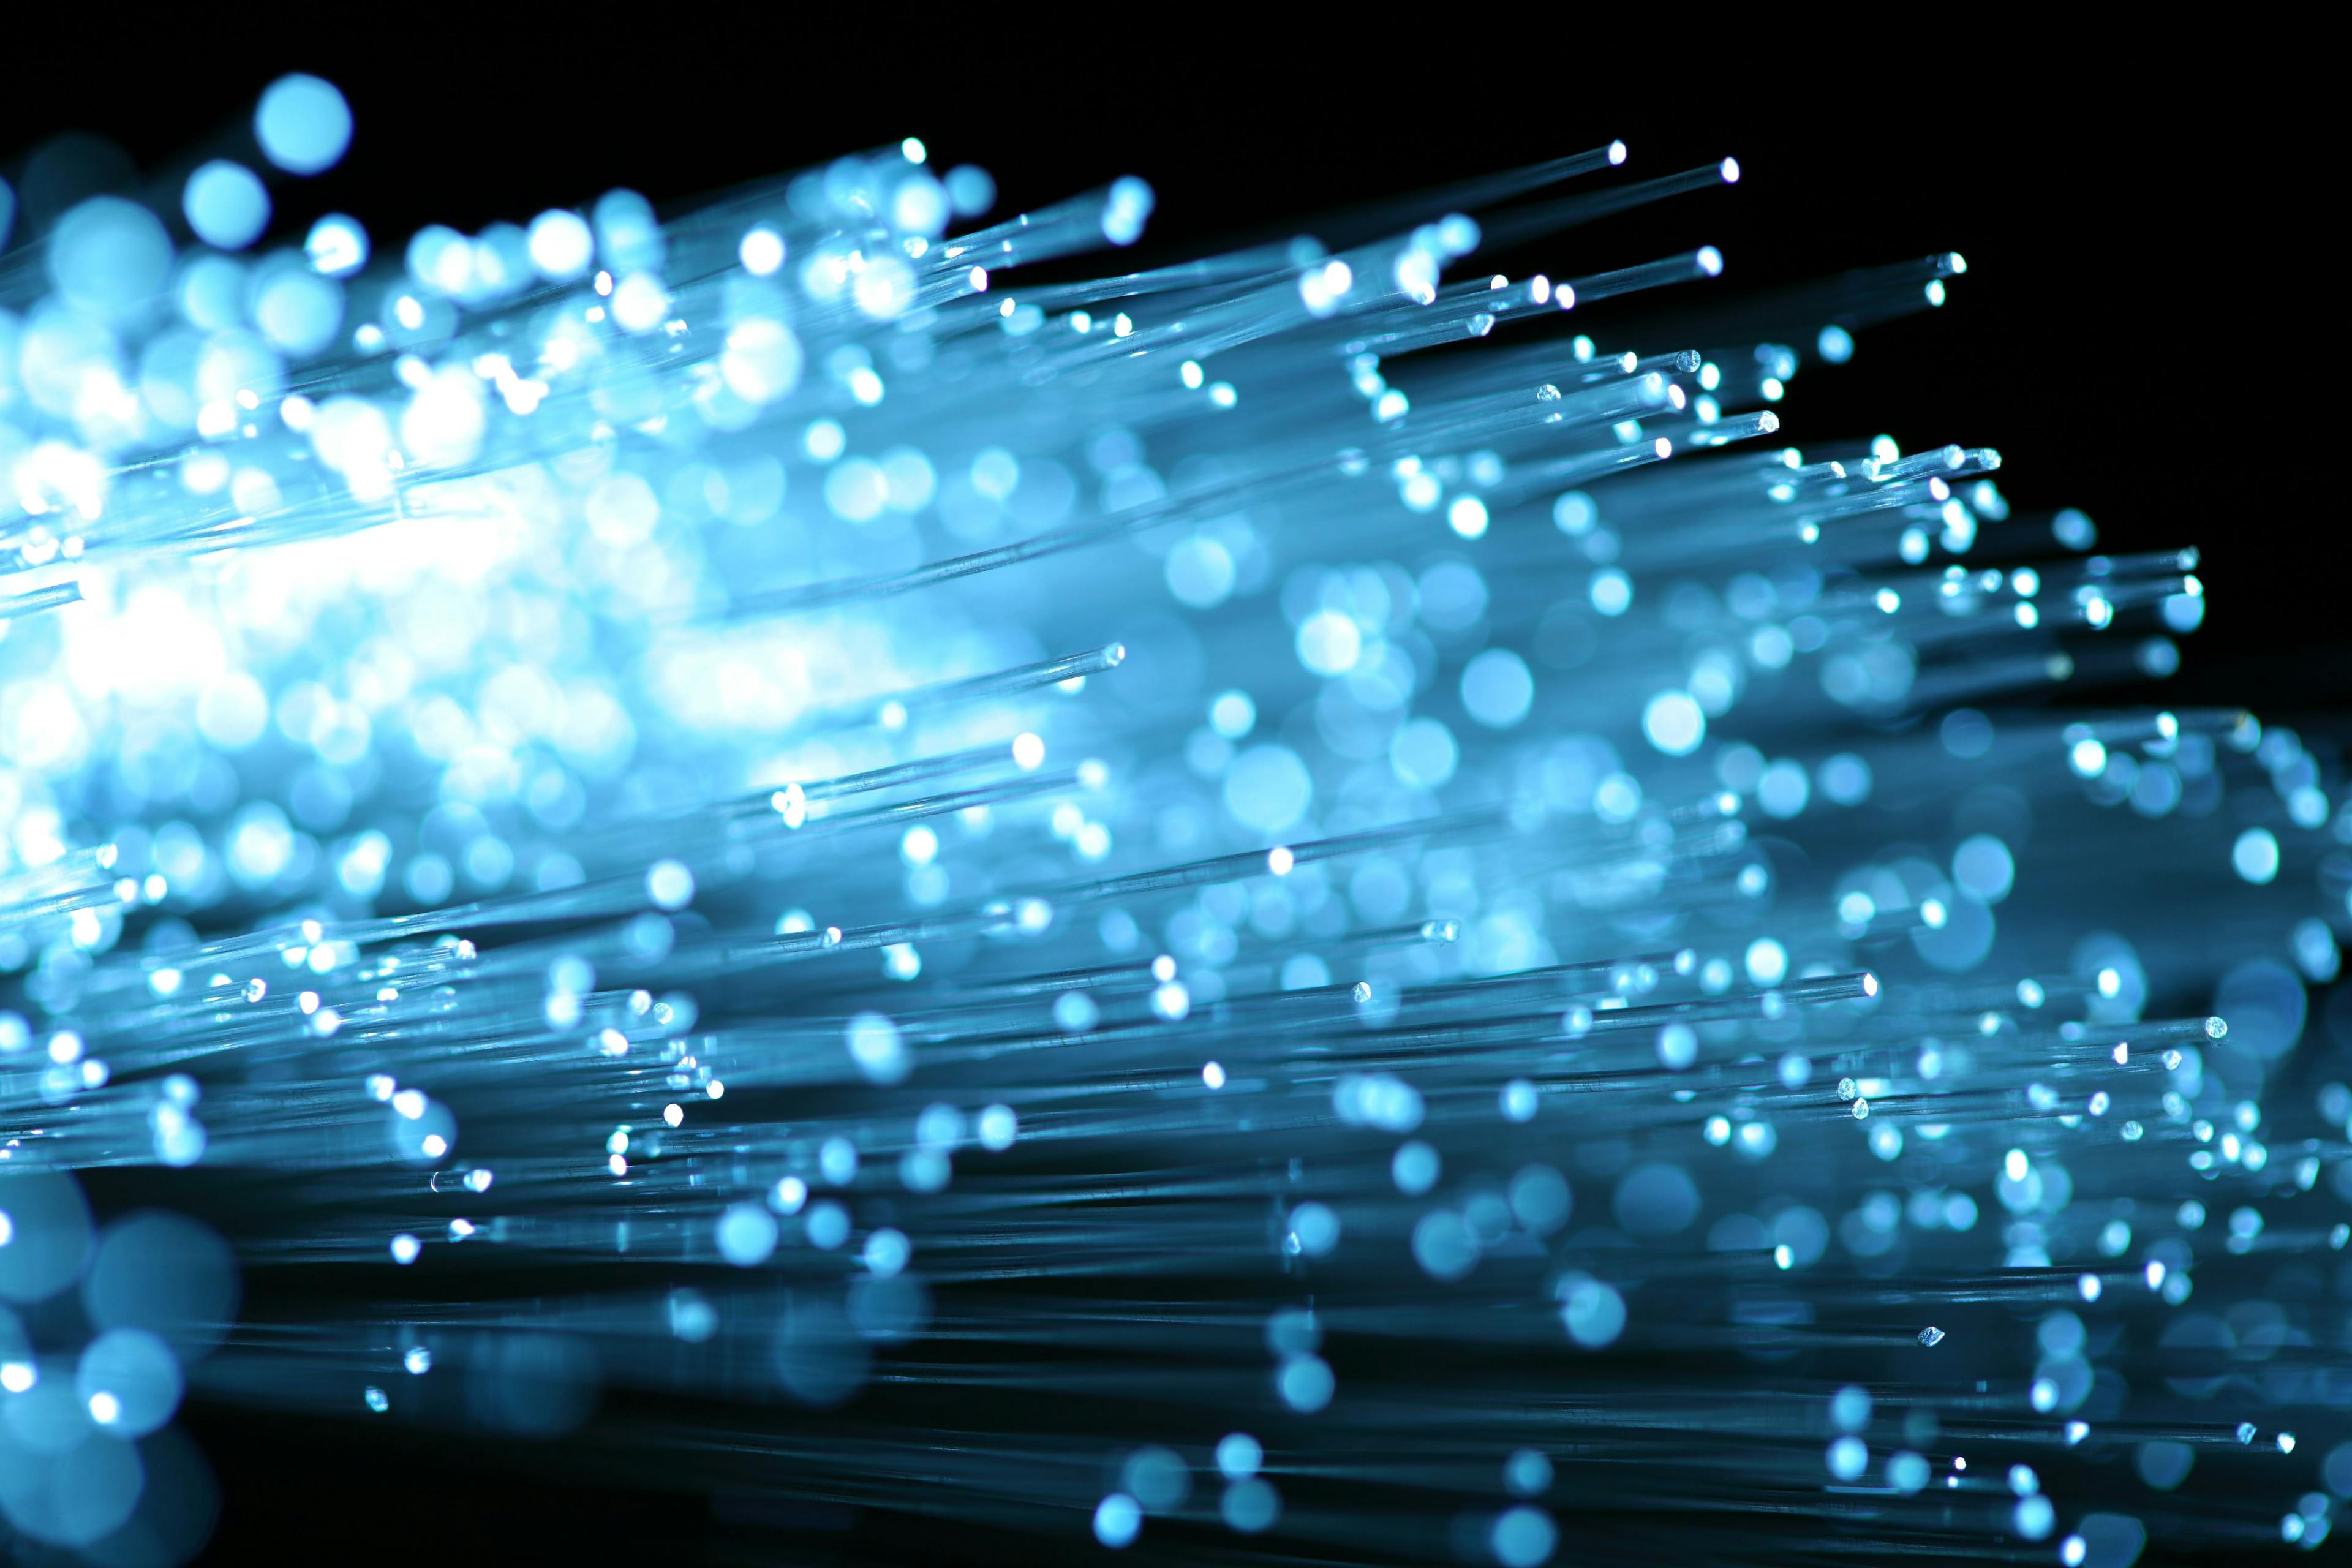 abstract view of fiber optics | Image Credit: © nikkytok - stock.adobe.com